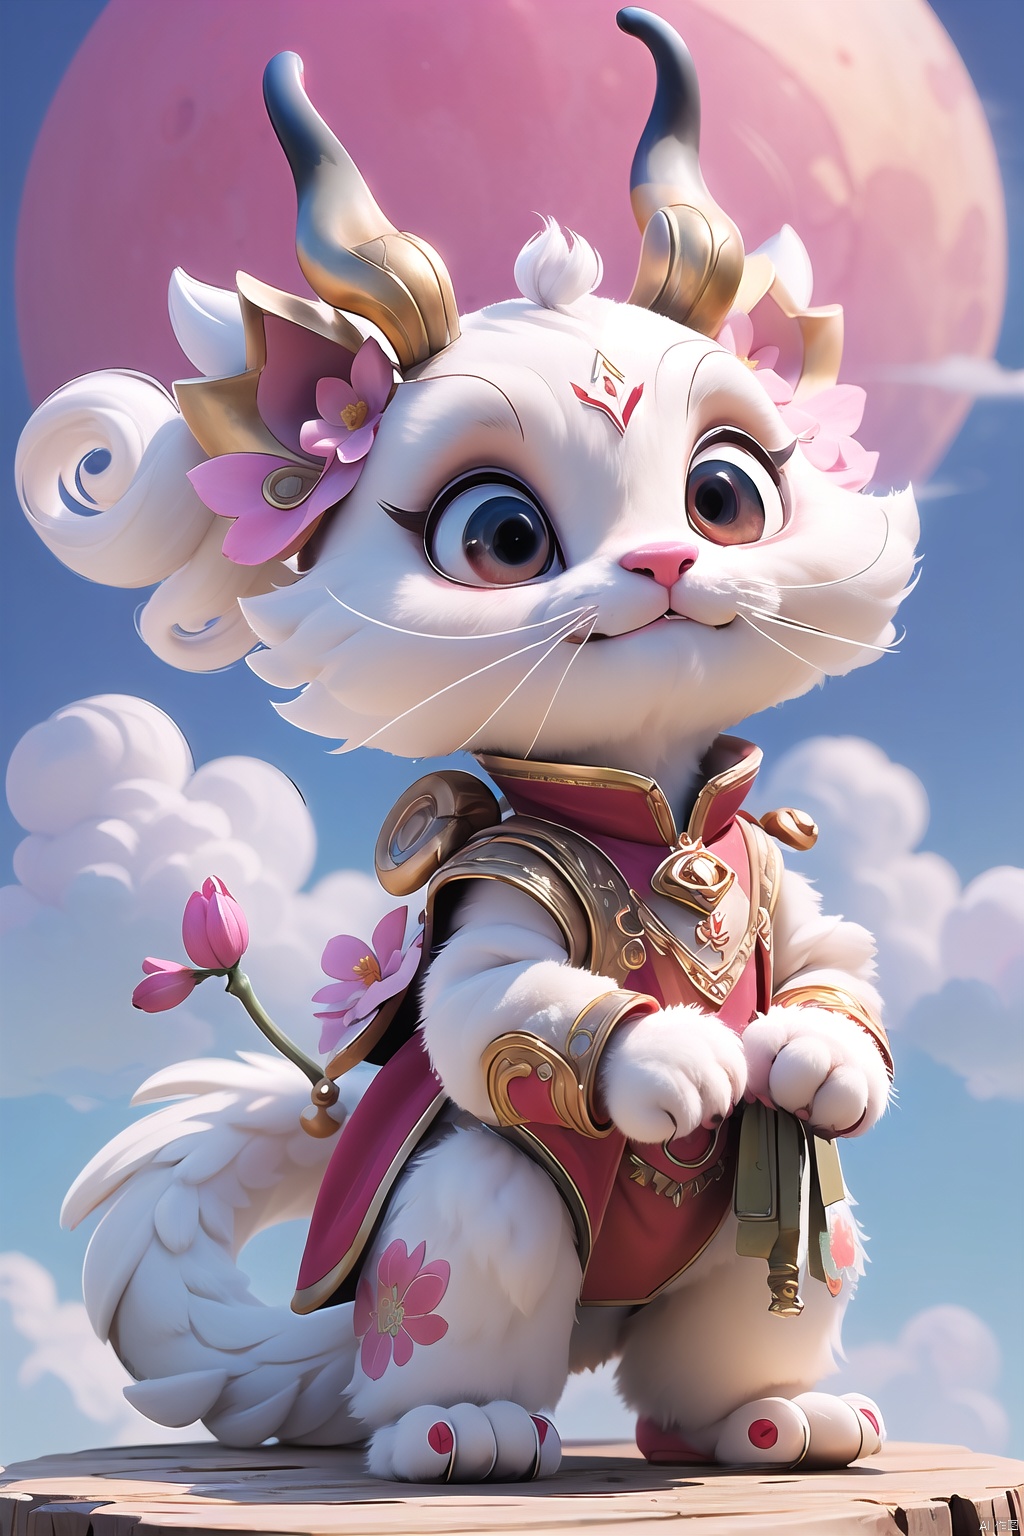  eastrn_cat,cute_girl,cat,white_cat,flower,standing,dragon horns,hair_flower,pink_moon,clouds,